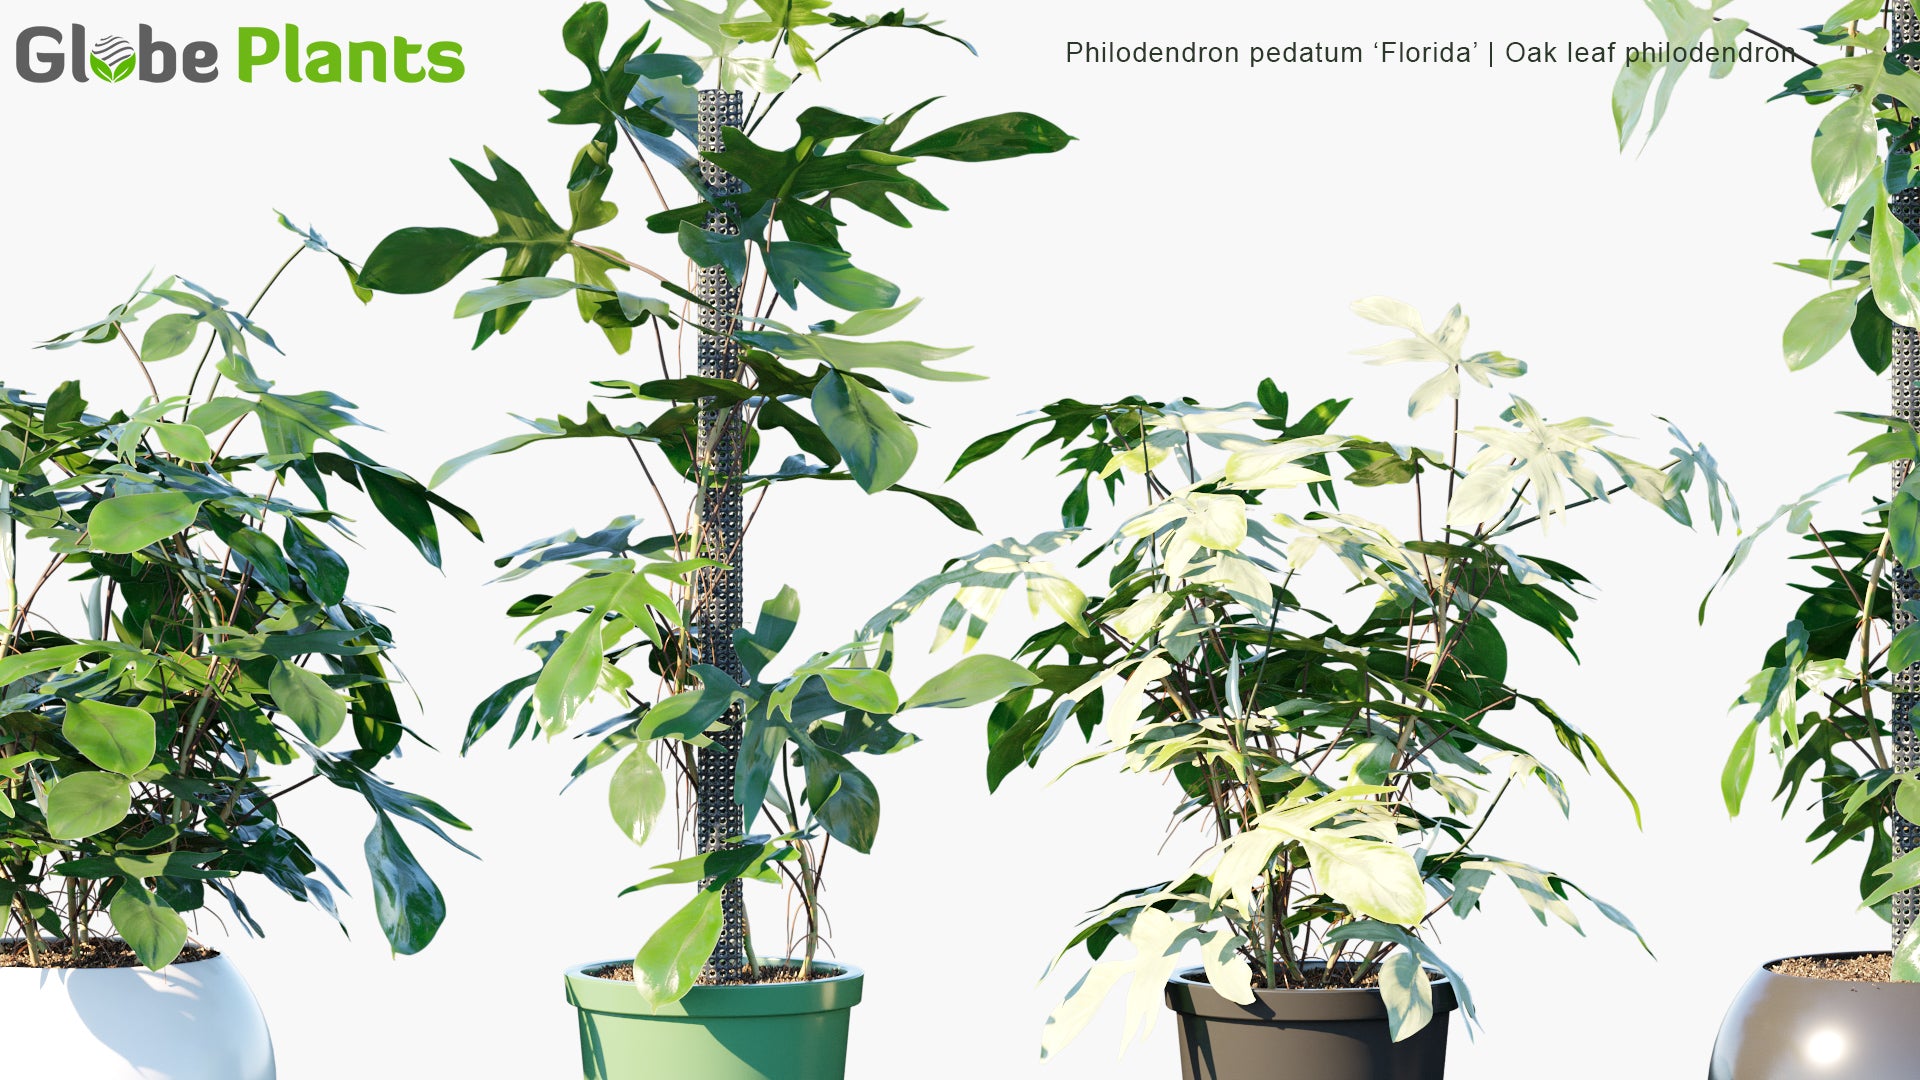 Philodendron Pedatum 'Florida' - Oak Leaf Philodendron